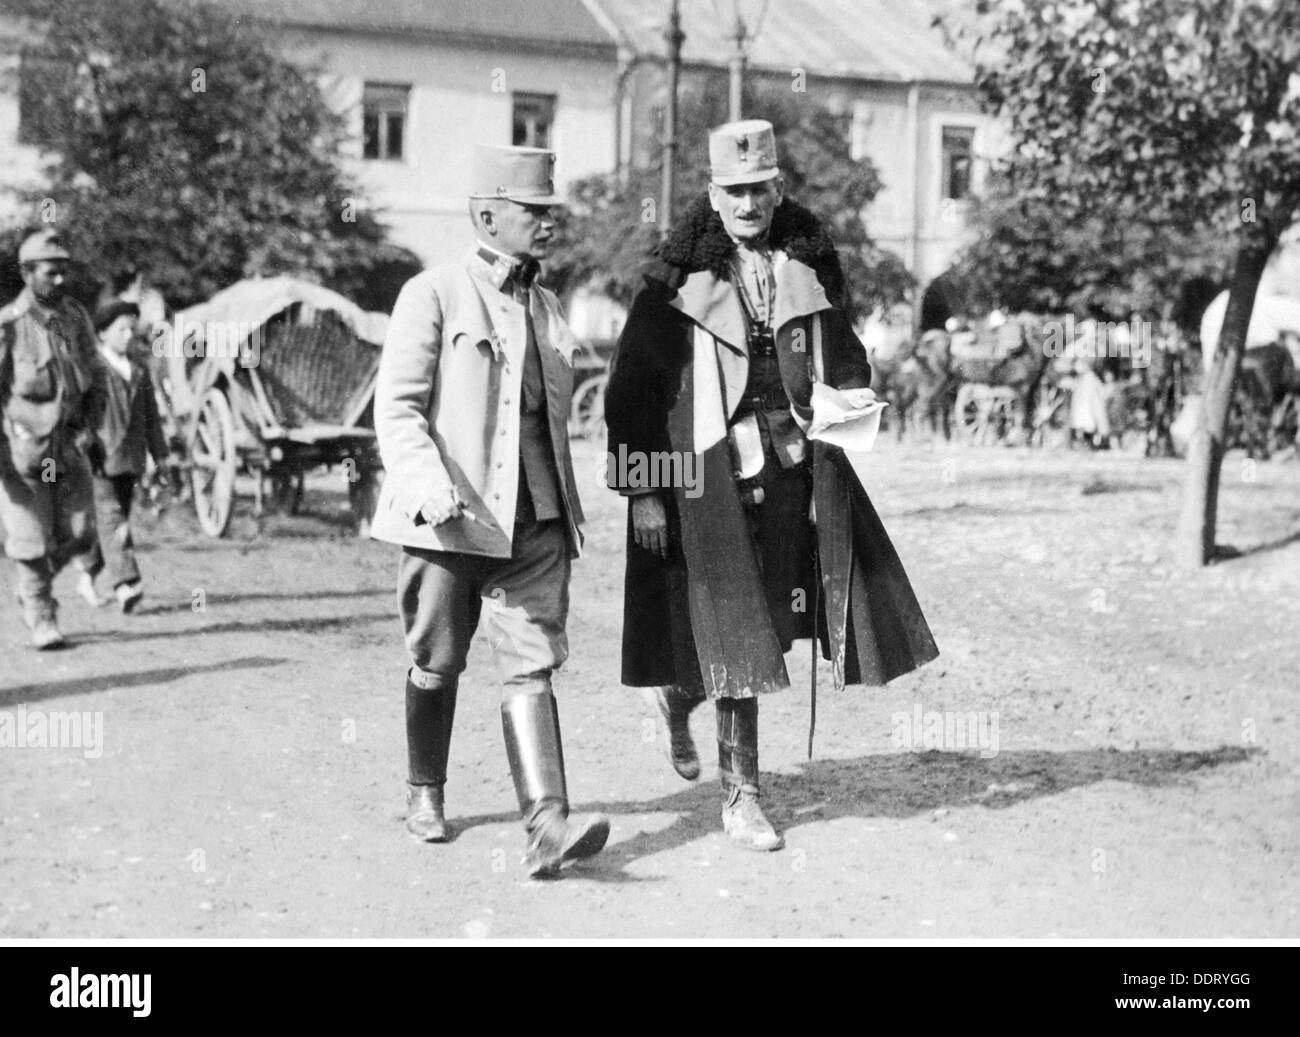 Boroevic von Bojna, Svetozar, 13.12.1856 - 23.5.1920, Austro-Hungarian general, commander of the VI Army Corps 26.9.1909 - 3.9.1914, full length, at the marketplace of Krosno, Poland, mid 1914, Stock Photo